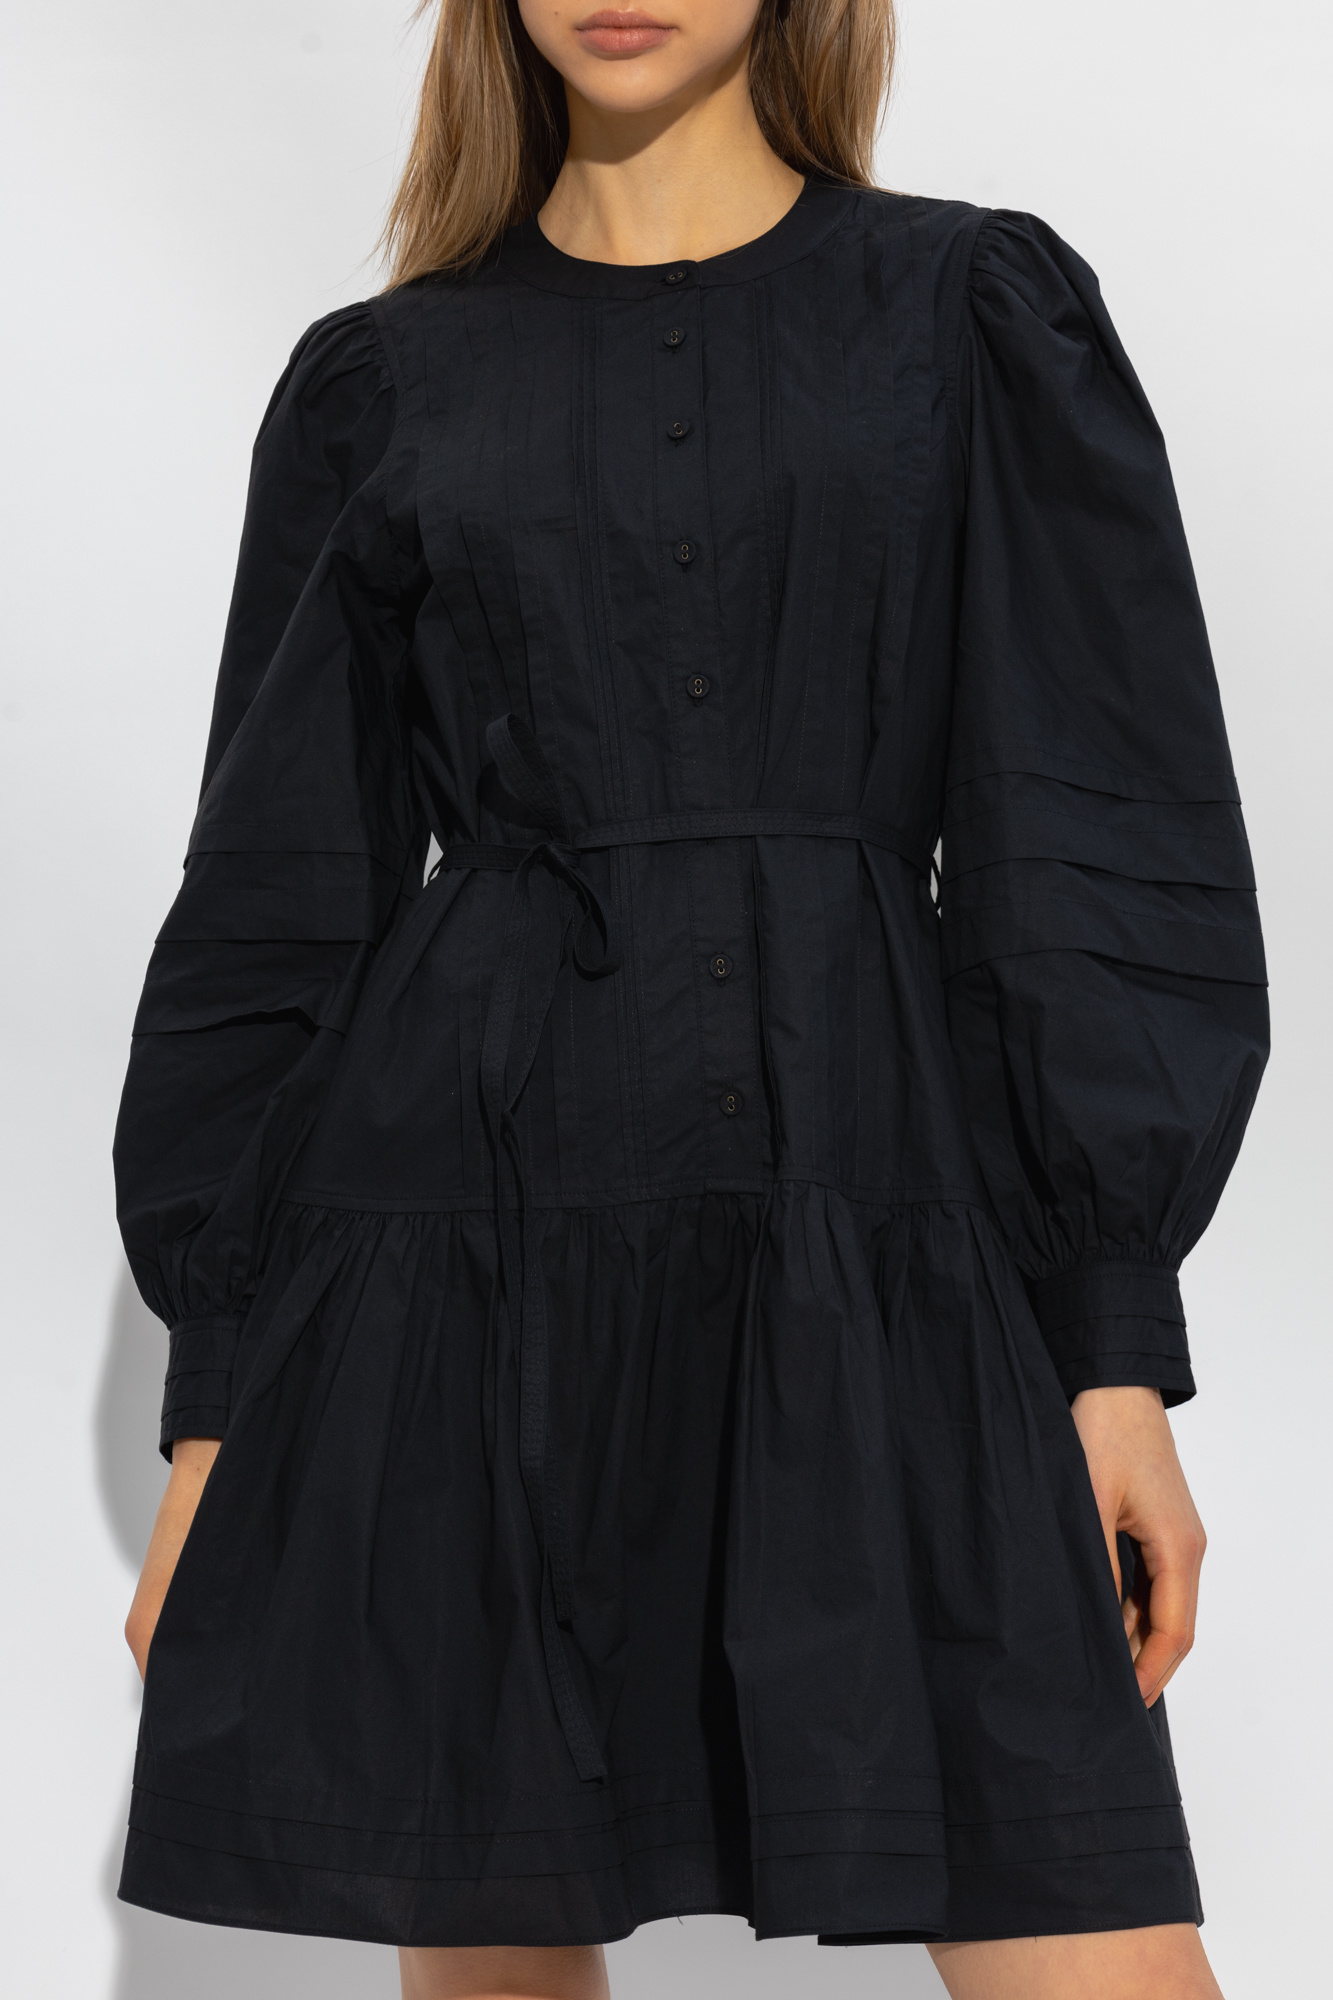 Ulla Johnson ‘Karina’ cotton knitted dress